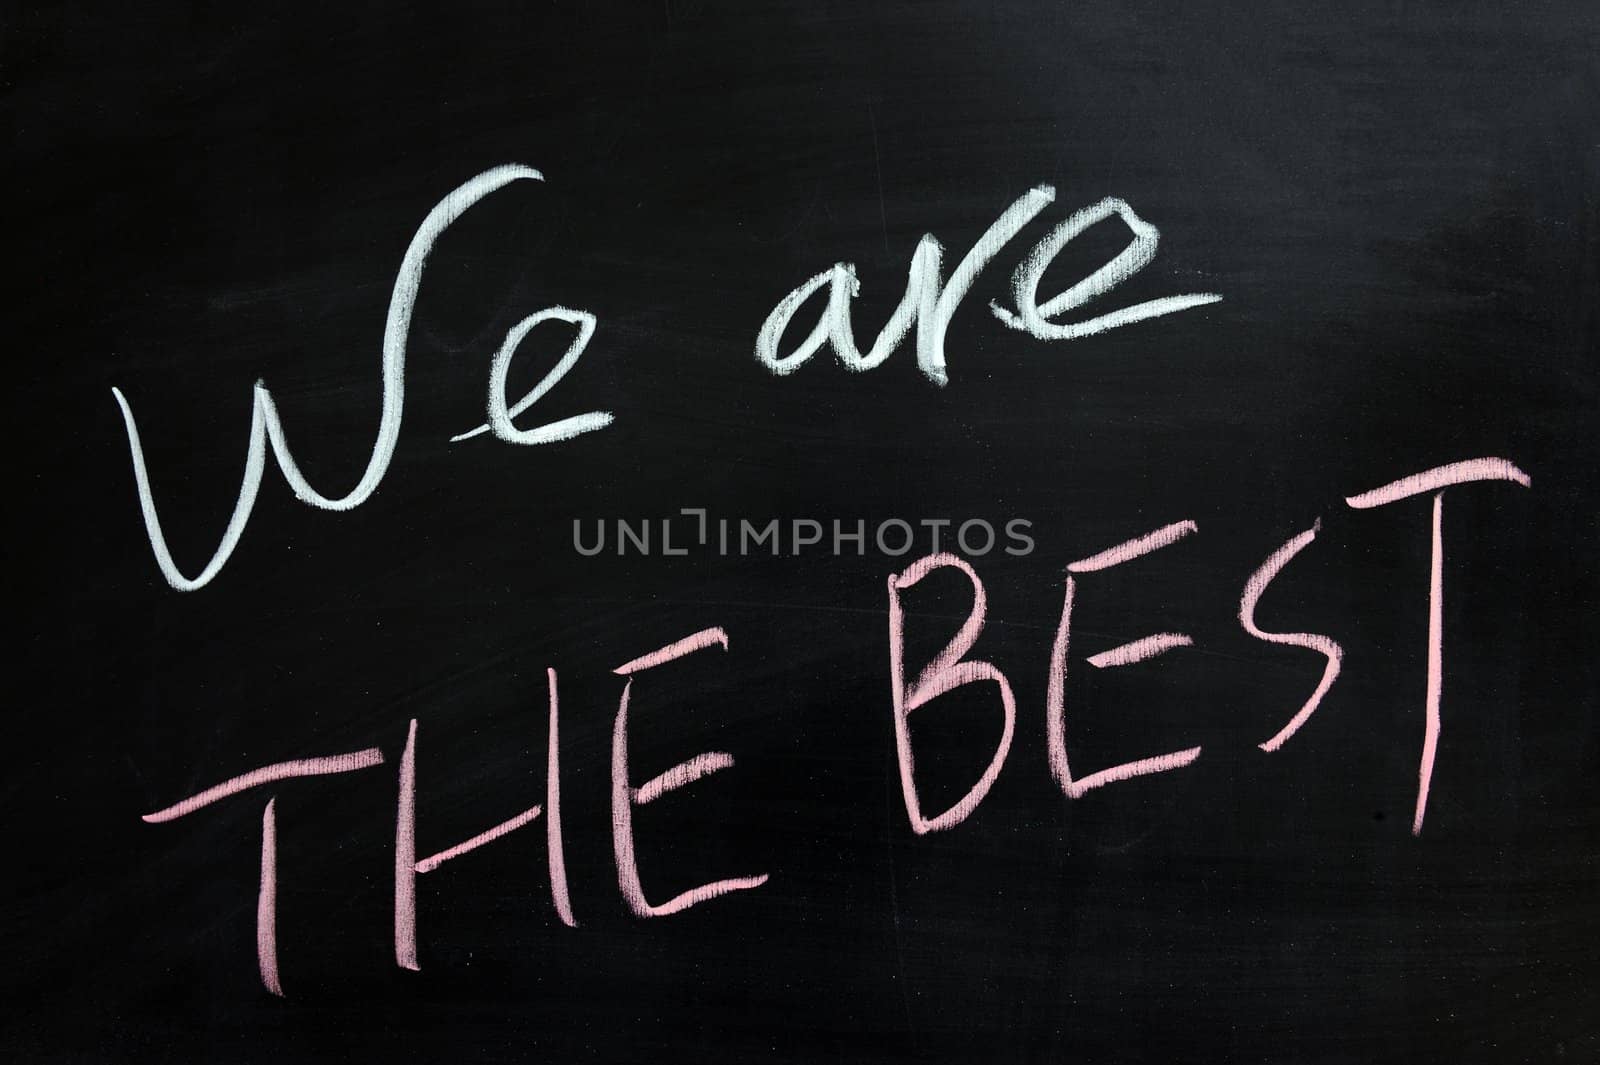 Chalk drawing - "We are the best" written on chalkboard